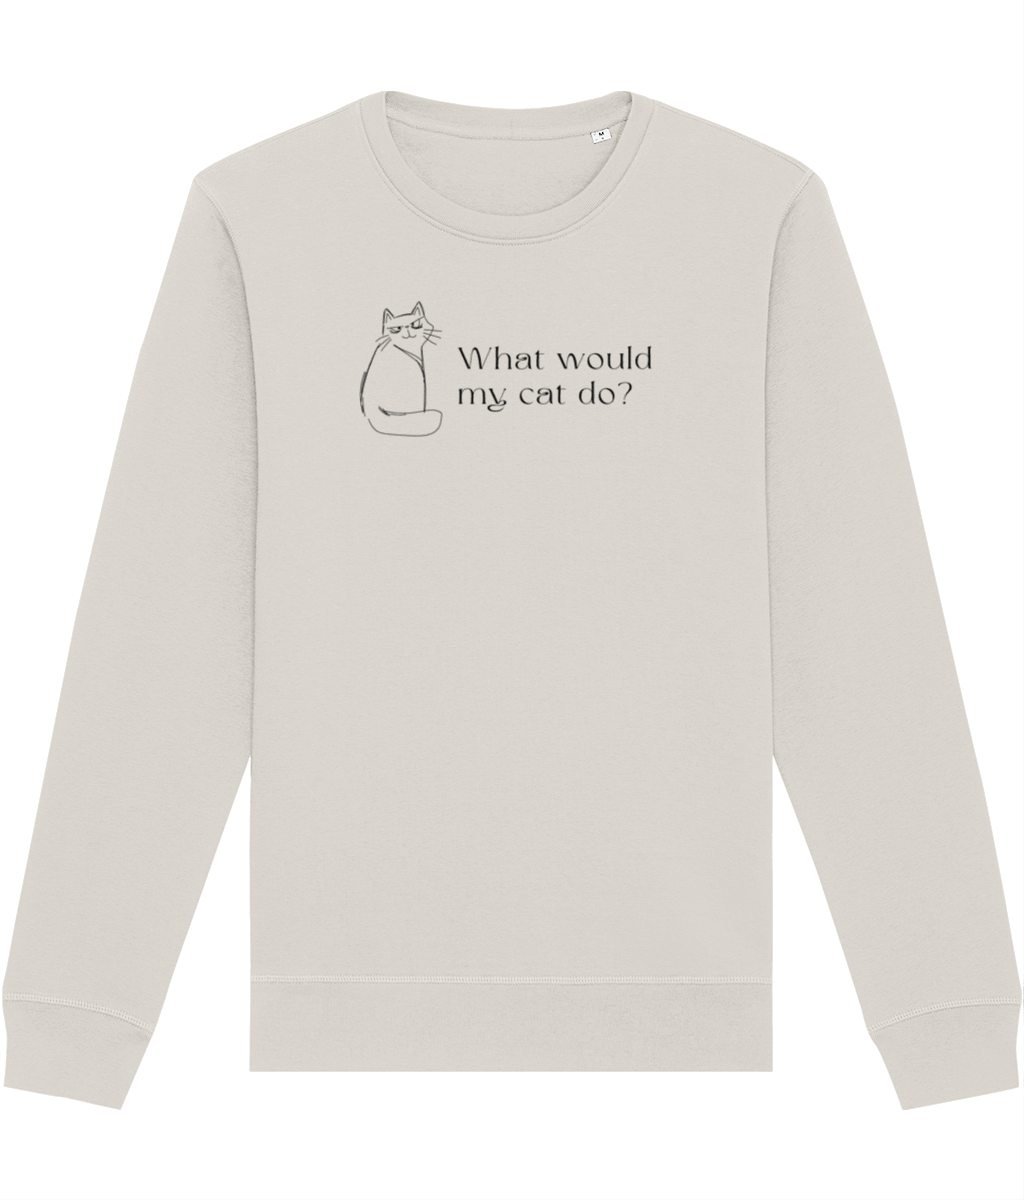 Organic Cotton 'Copy Cat' Funny Cat Sweatshirt - Cat Sweatshirt